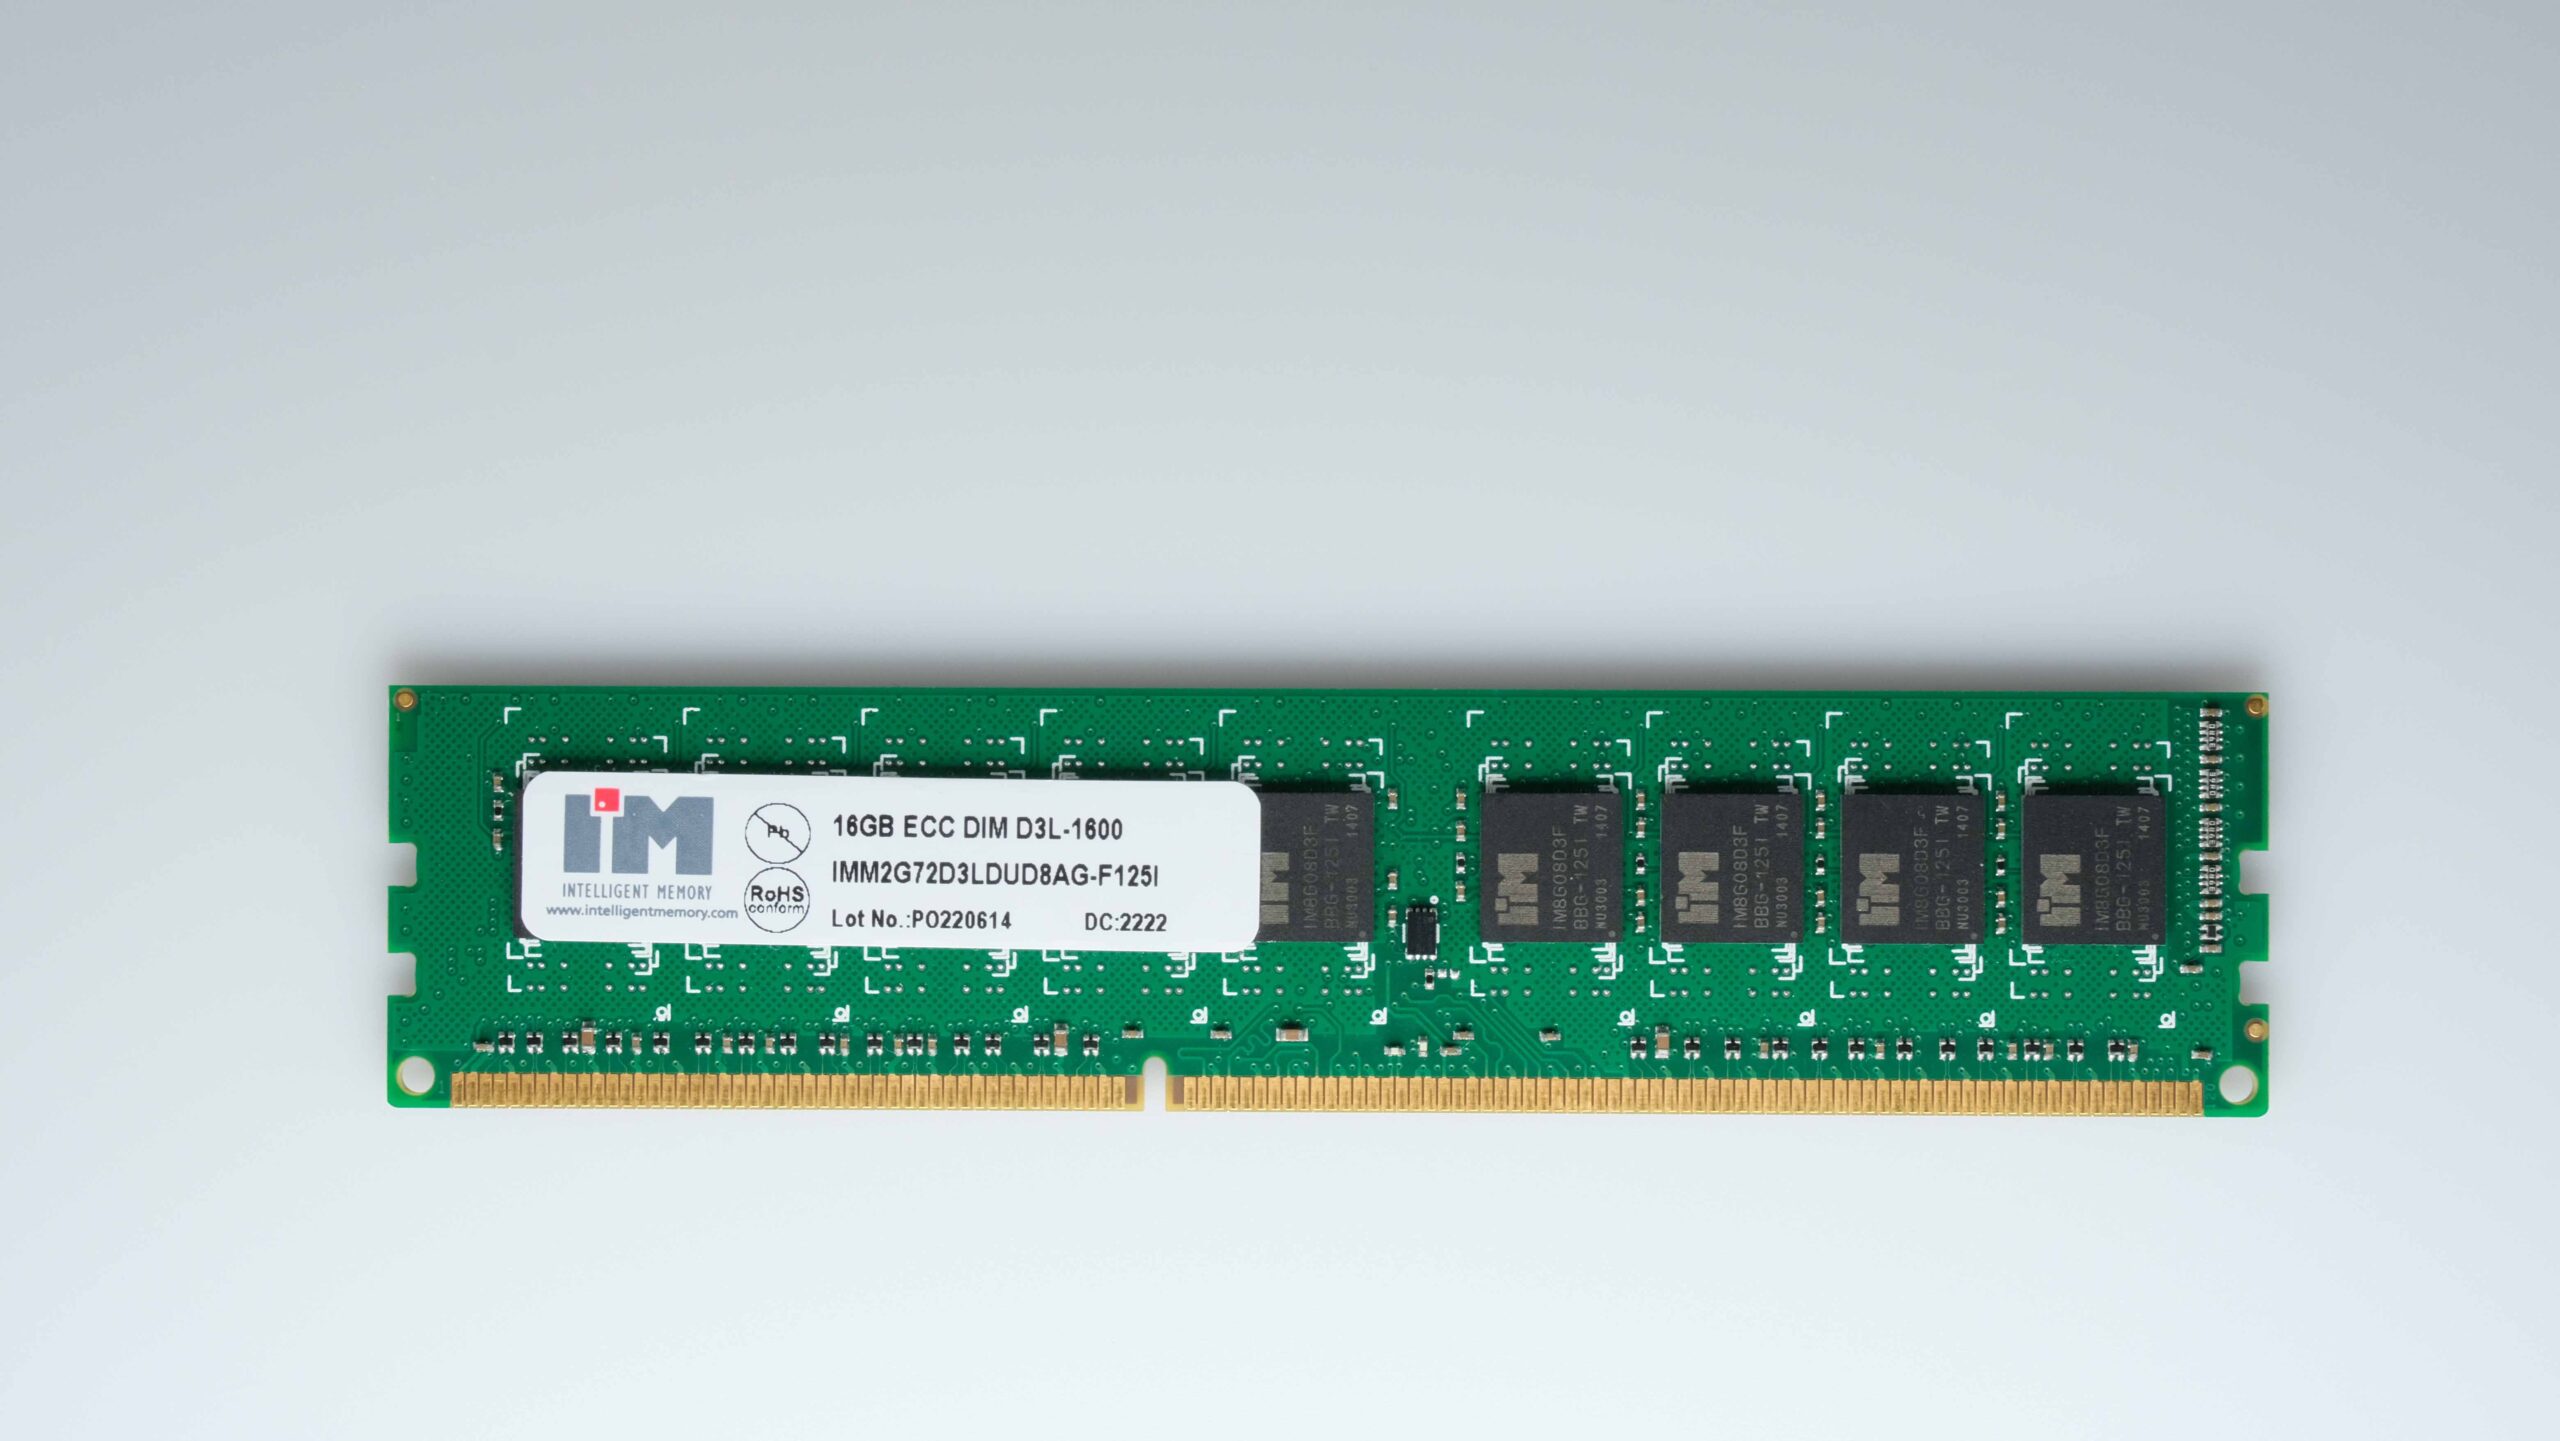 Moduł pamięci DDR3, Non-ECC UDIMM, 16GB, 0~95°C, IMM2G64D3LDUD8AG-F107